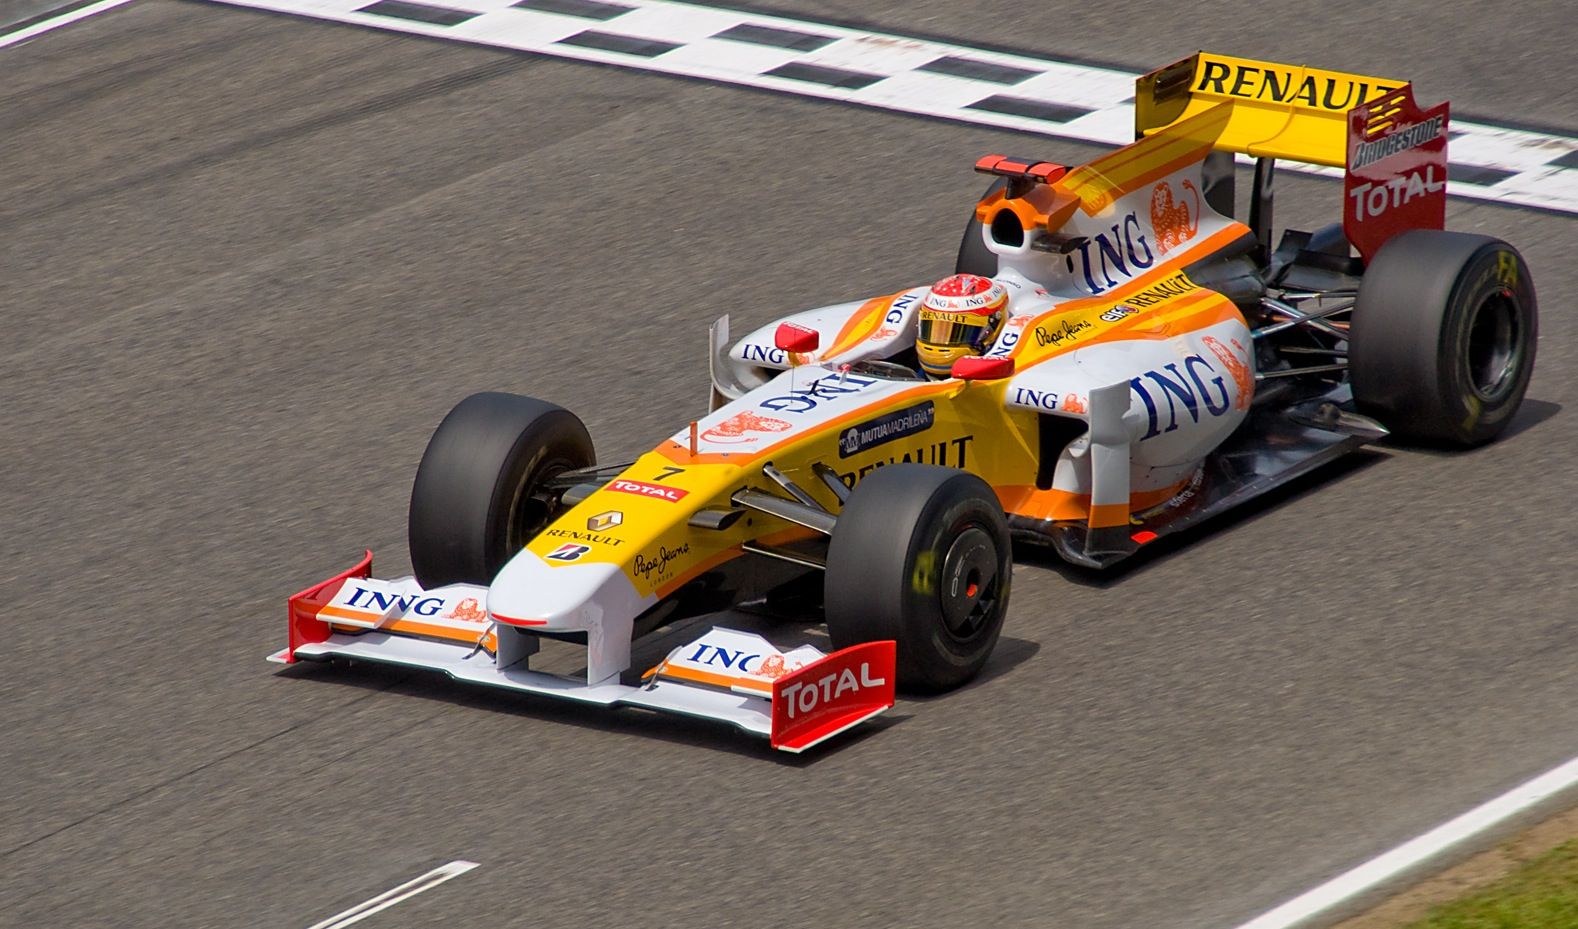 2009 Renault F1 R29